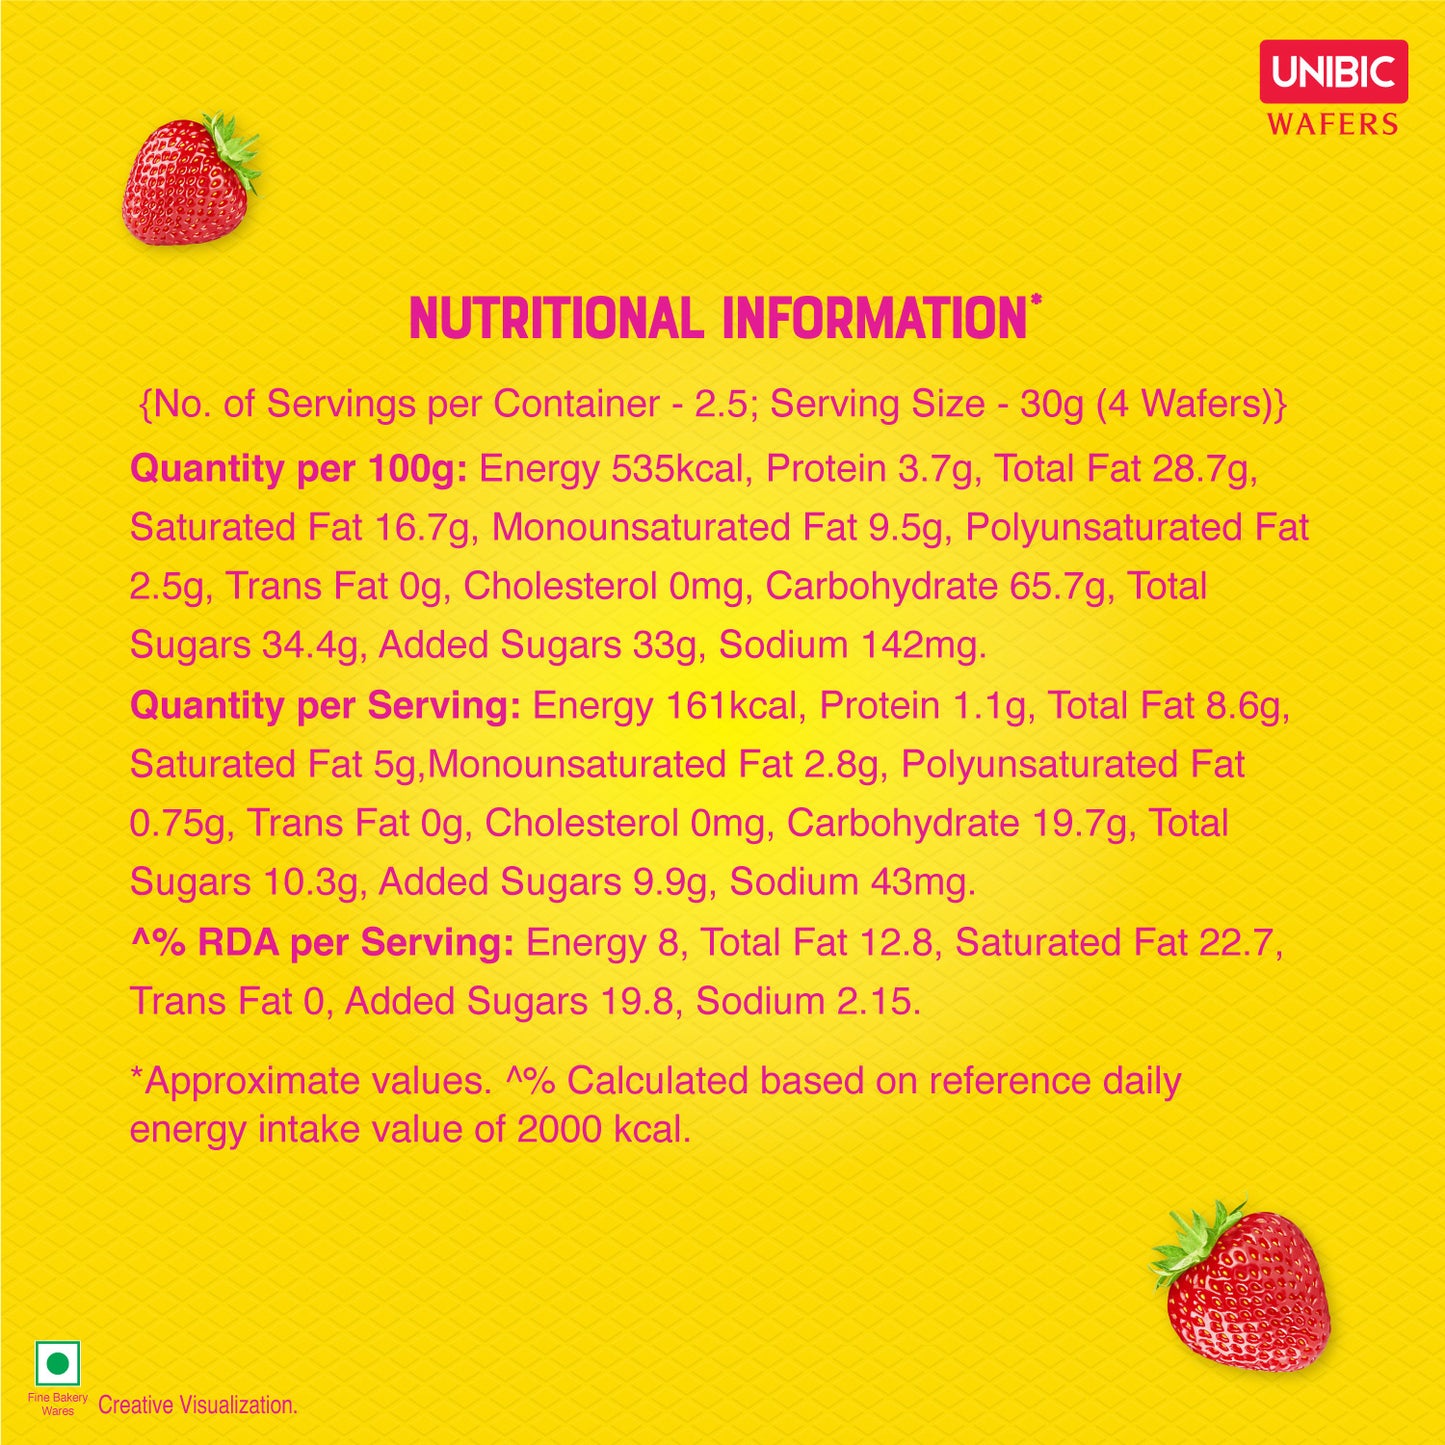 Unibic Yummy Strawberry Wafers - 75gm